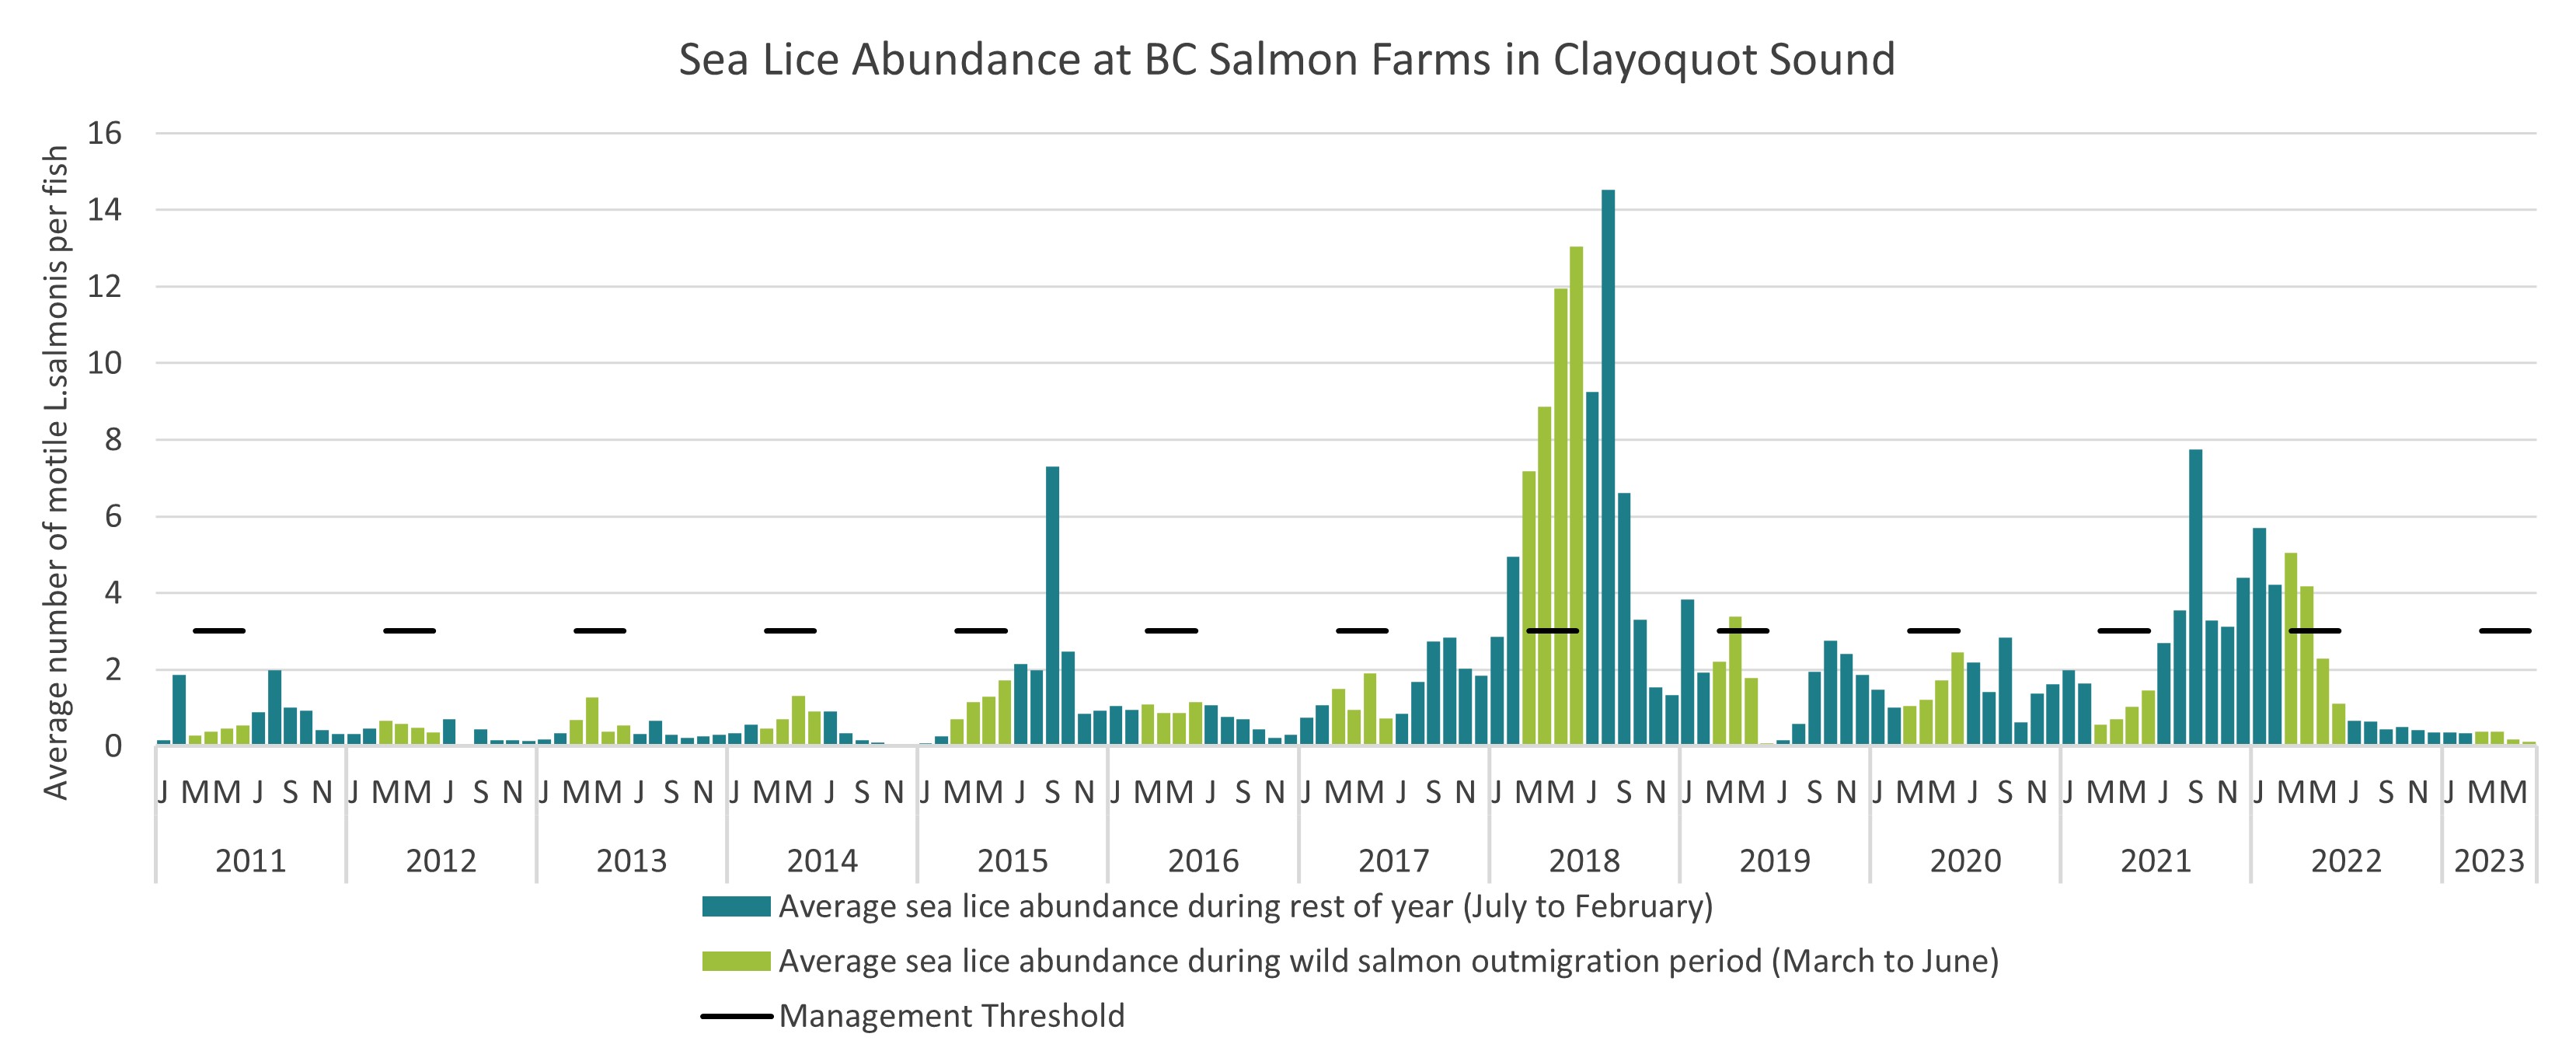 Sea Lice Abundance at BC Salmon Farms in Clayoquot Sound, 2011 to 2023